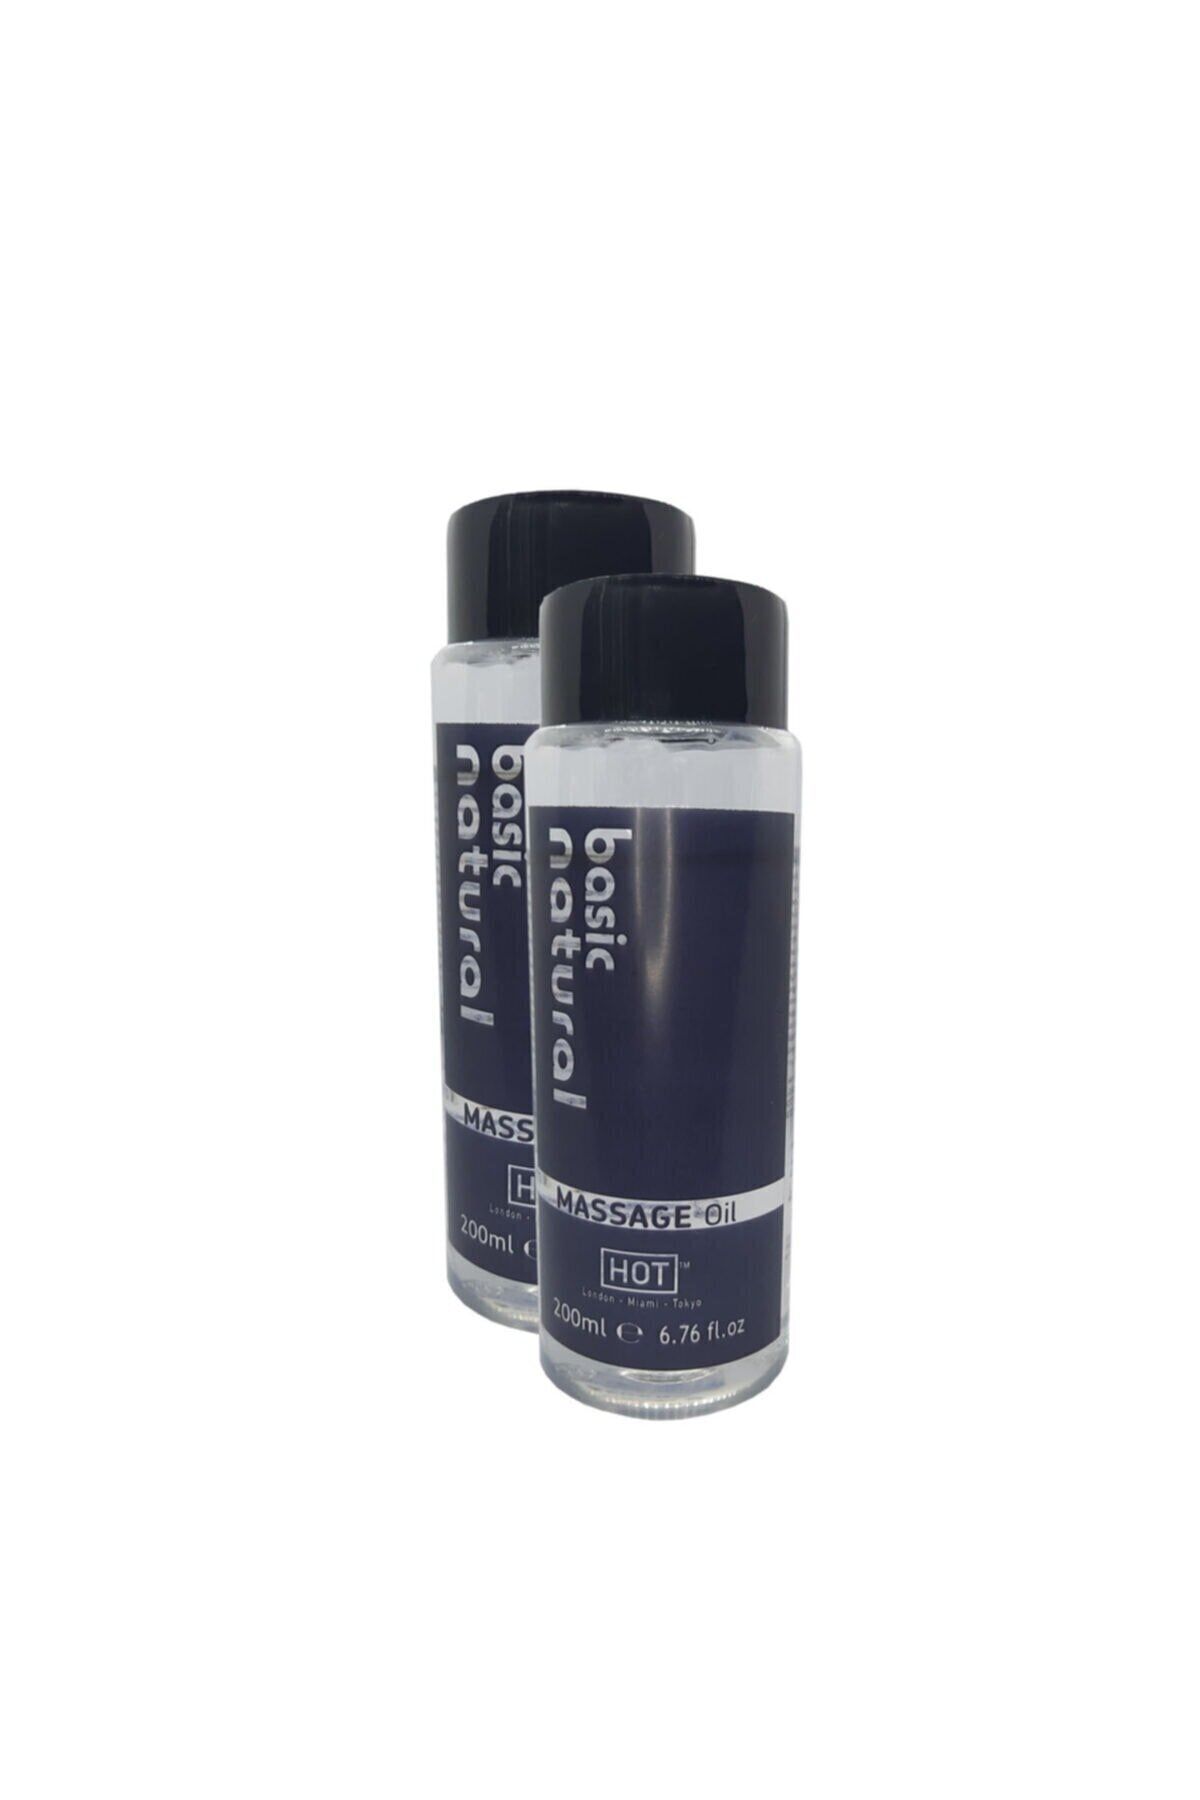 Hot Basic Natural Erkek İstek Artırıcı Rahatlatıcı Massage Oil 200 ml - 2 Adet